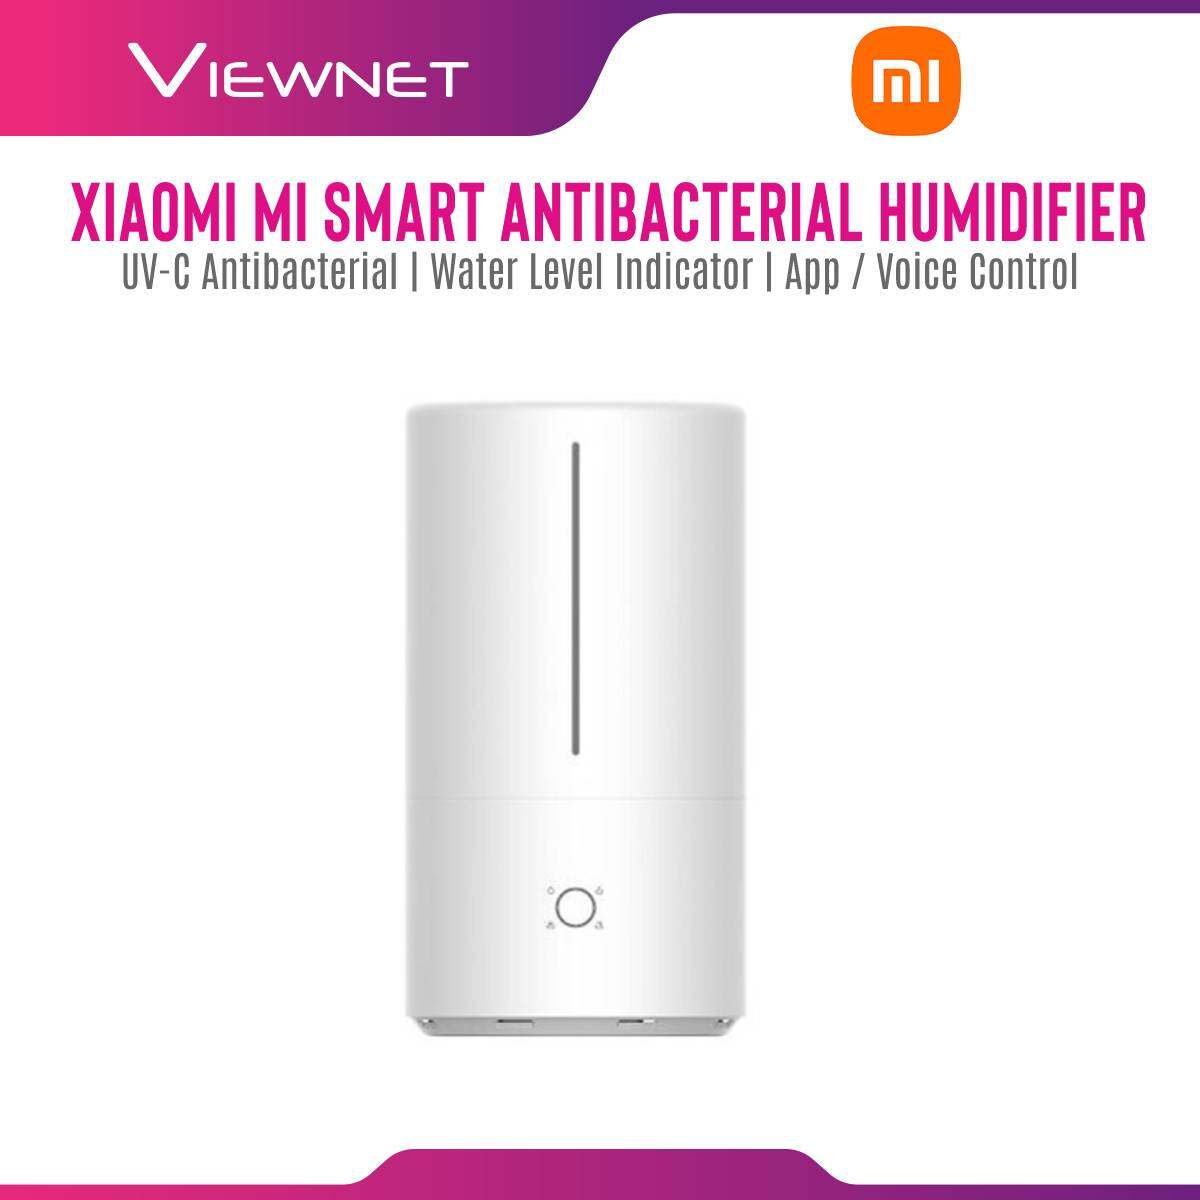 Xiaomi Mi Smart Antibacterial Humidifier 4.5L with UV-C Antibacterial, App / Voice Control, Water Level Indicator